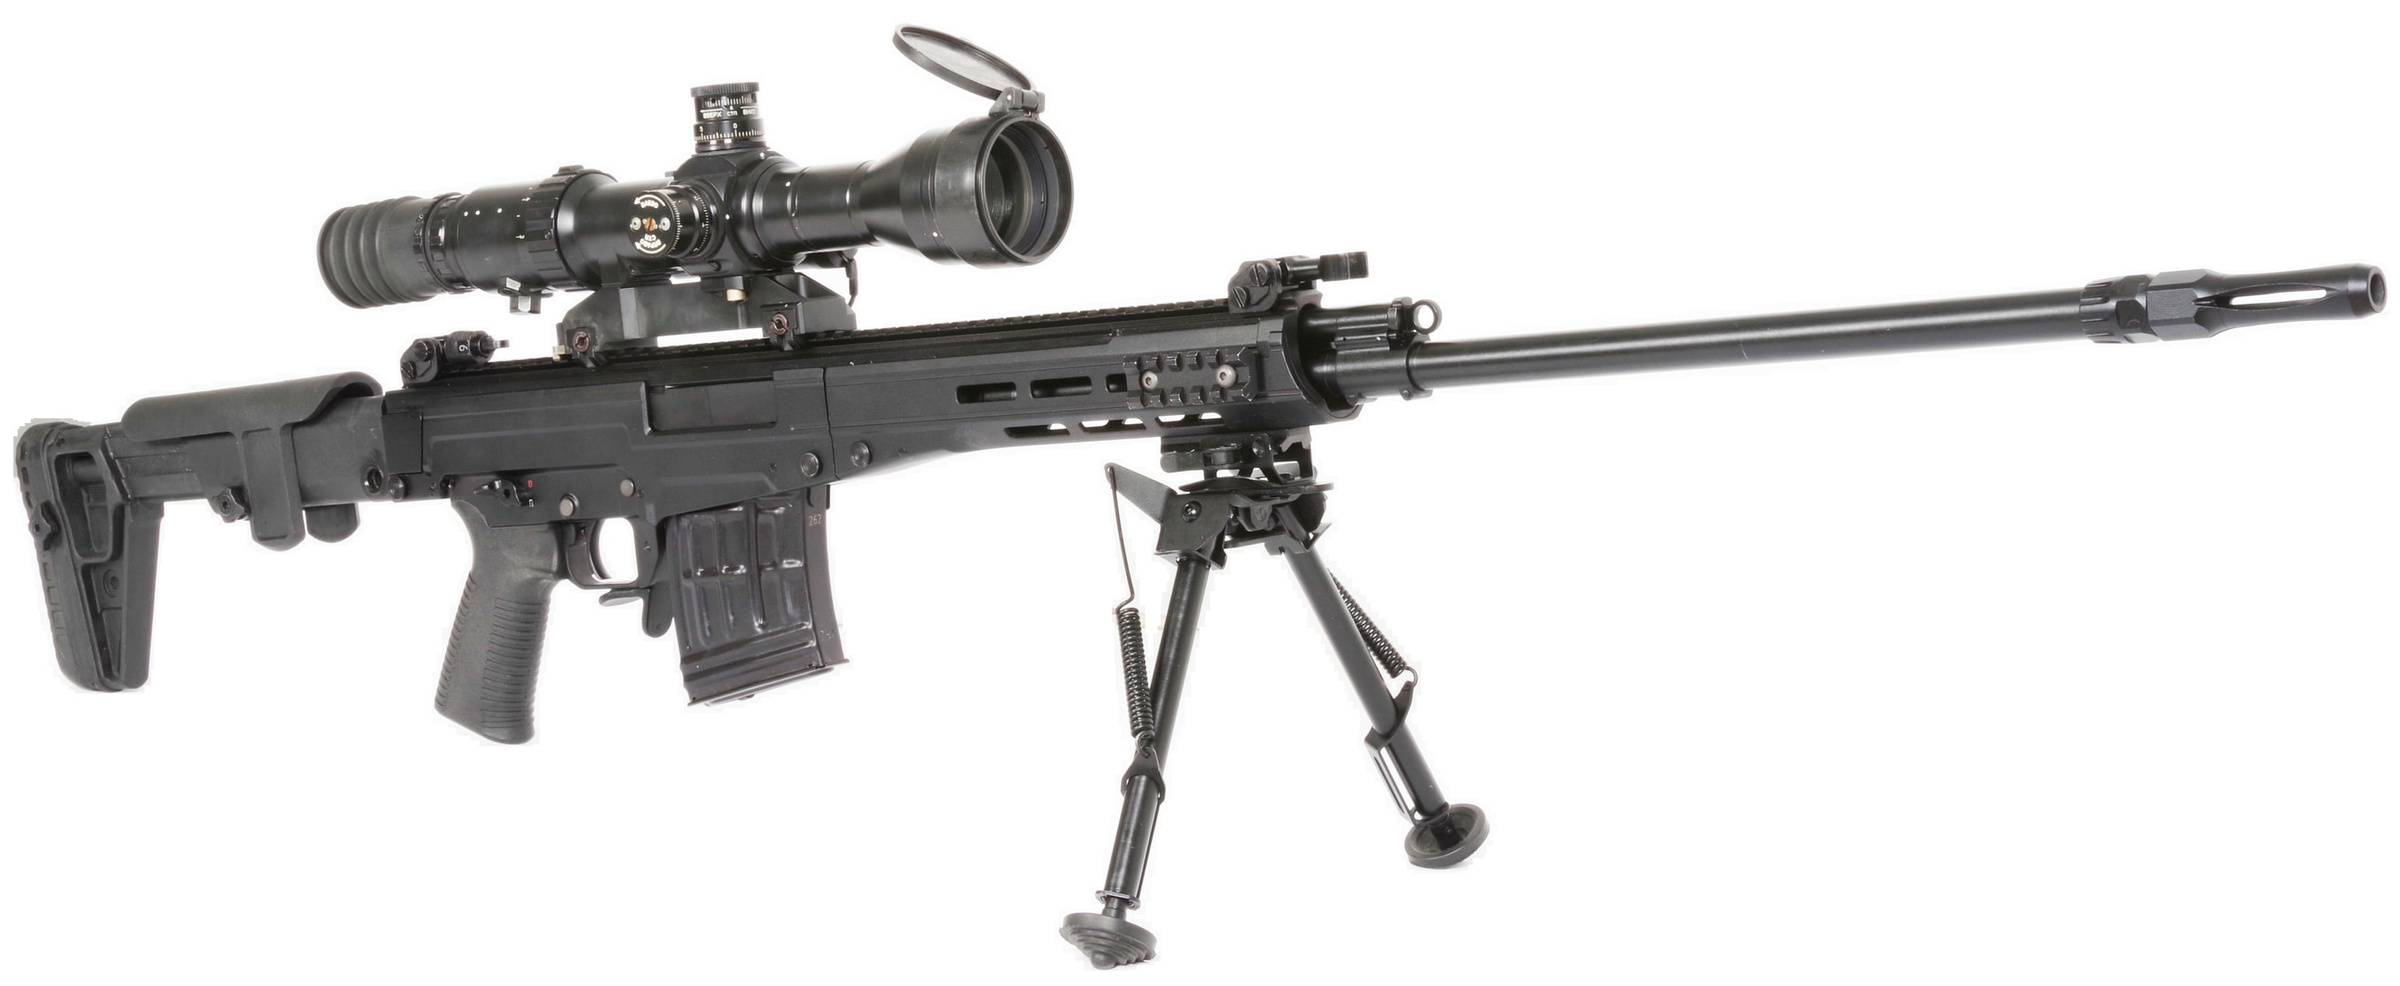 Снайперская винтовка Чукавина. Фото © Пресс-служба концерна "Калашников"